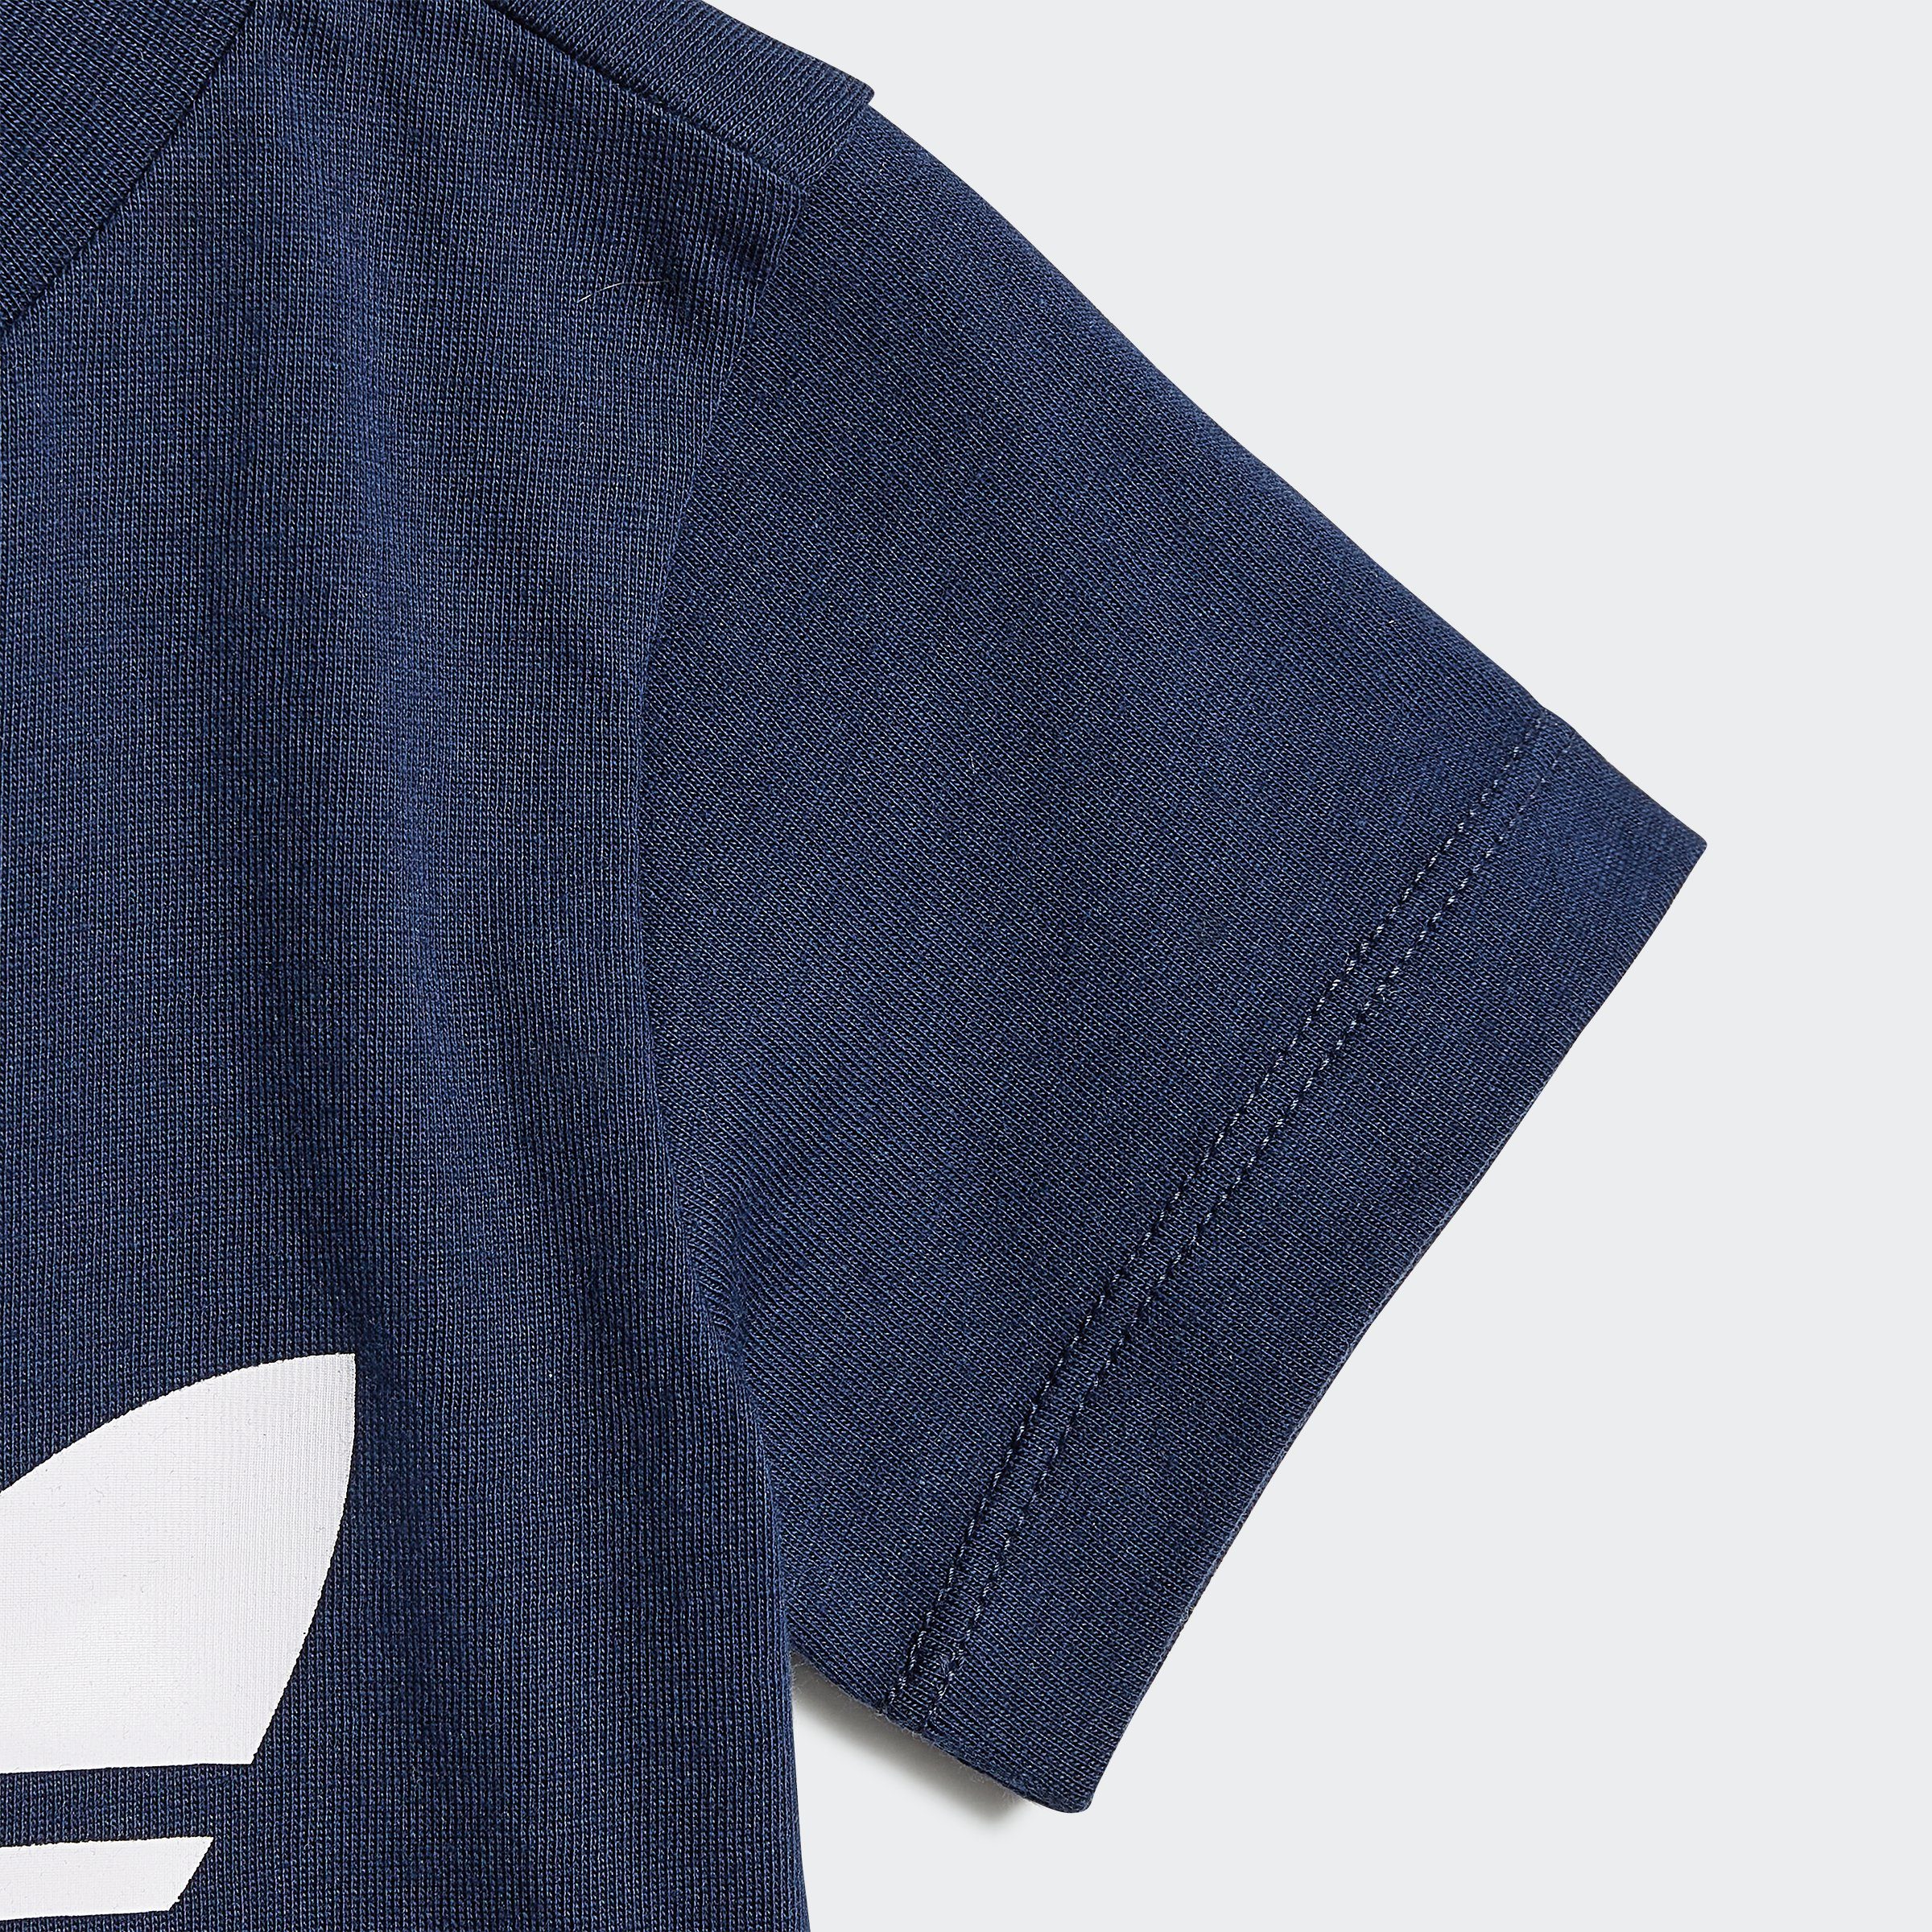 T-Shirt adidas Indigo Originals SHORTS & TREFOIL Shorts UND (Set) SET Night